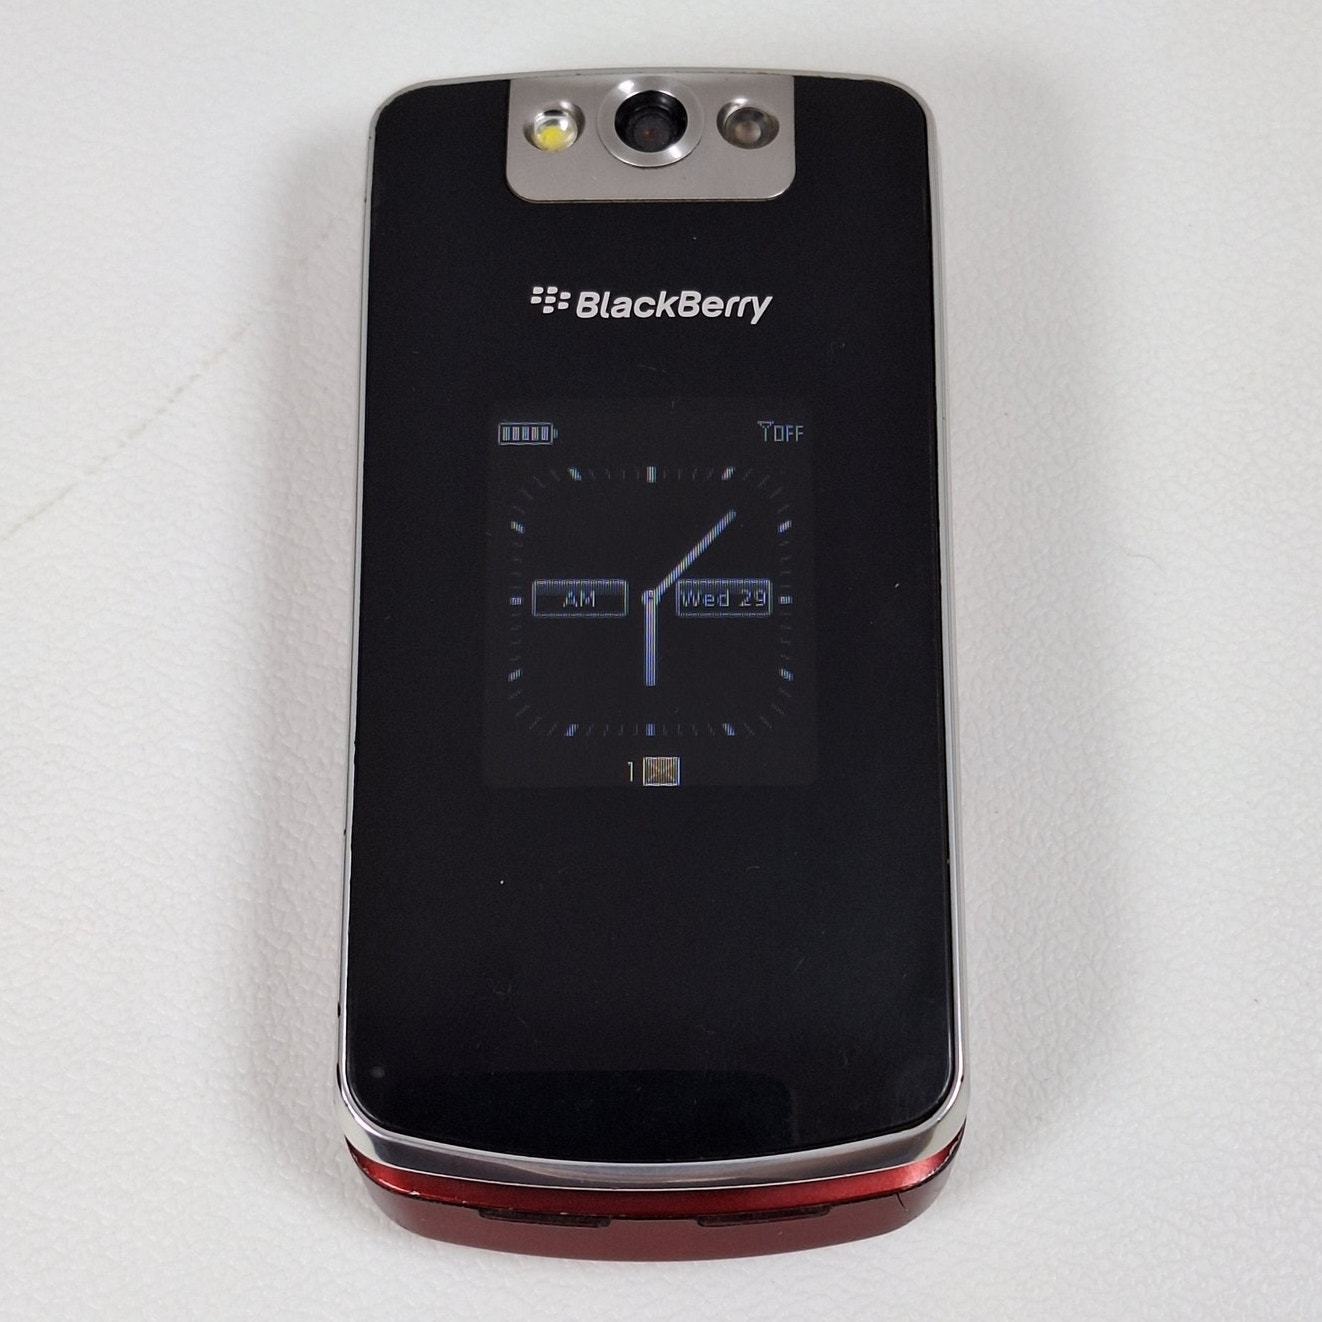 BlackBerry Pearl Flip 8220 Red Flip Phone (T-Mobile) - $139.99